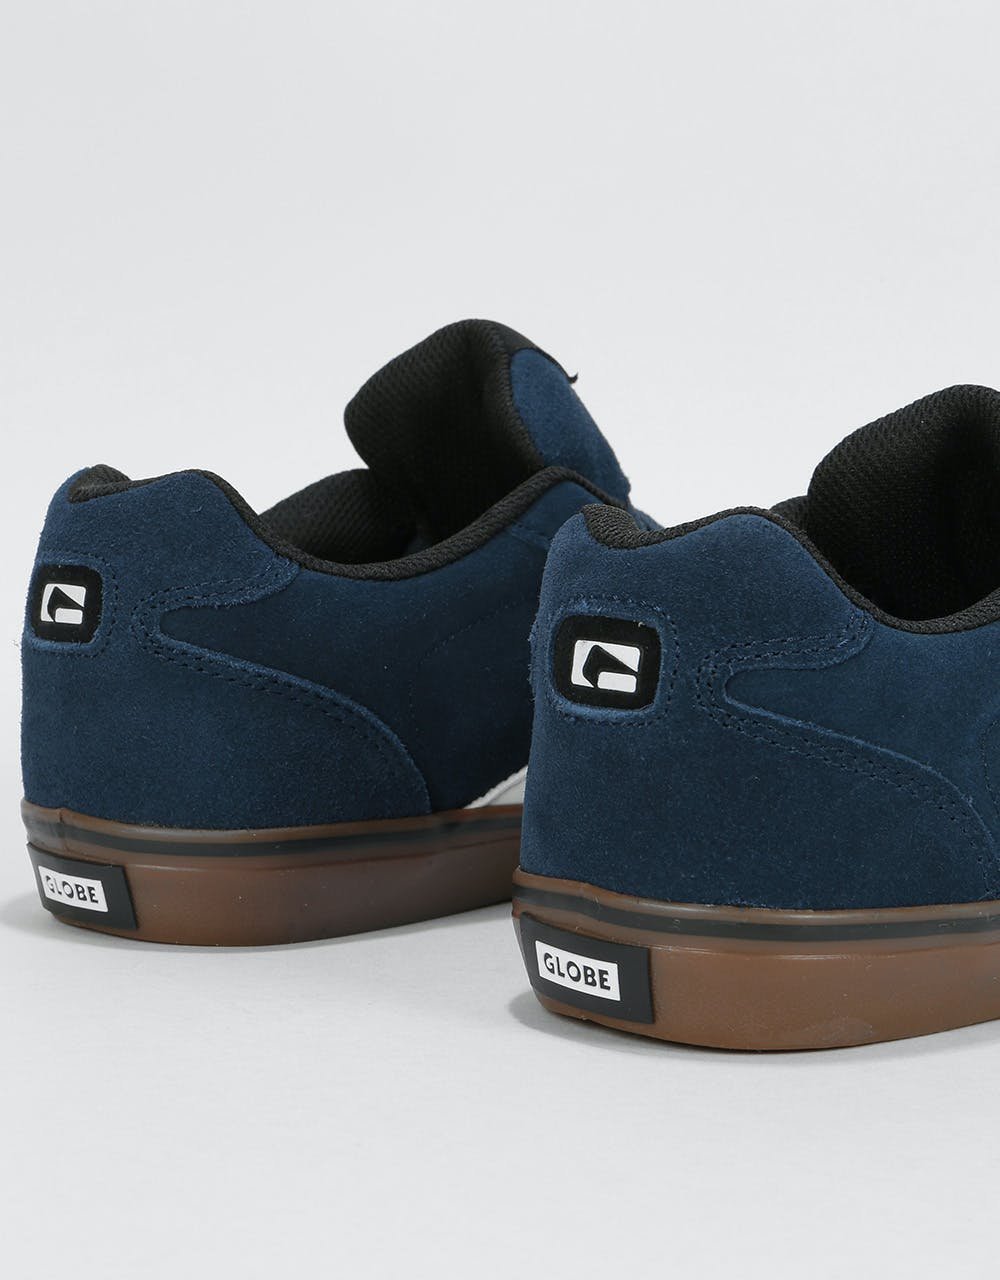 Globe Encore 2 Skate Shoes - Navy/Gum